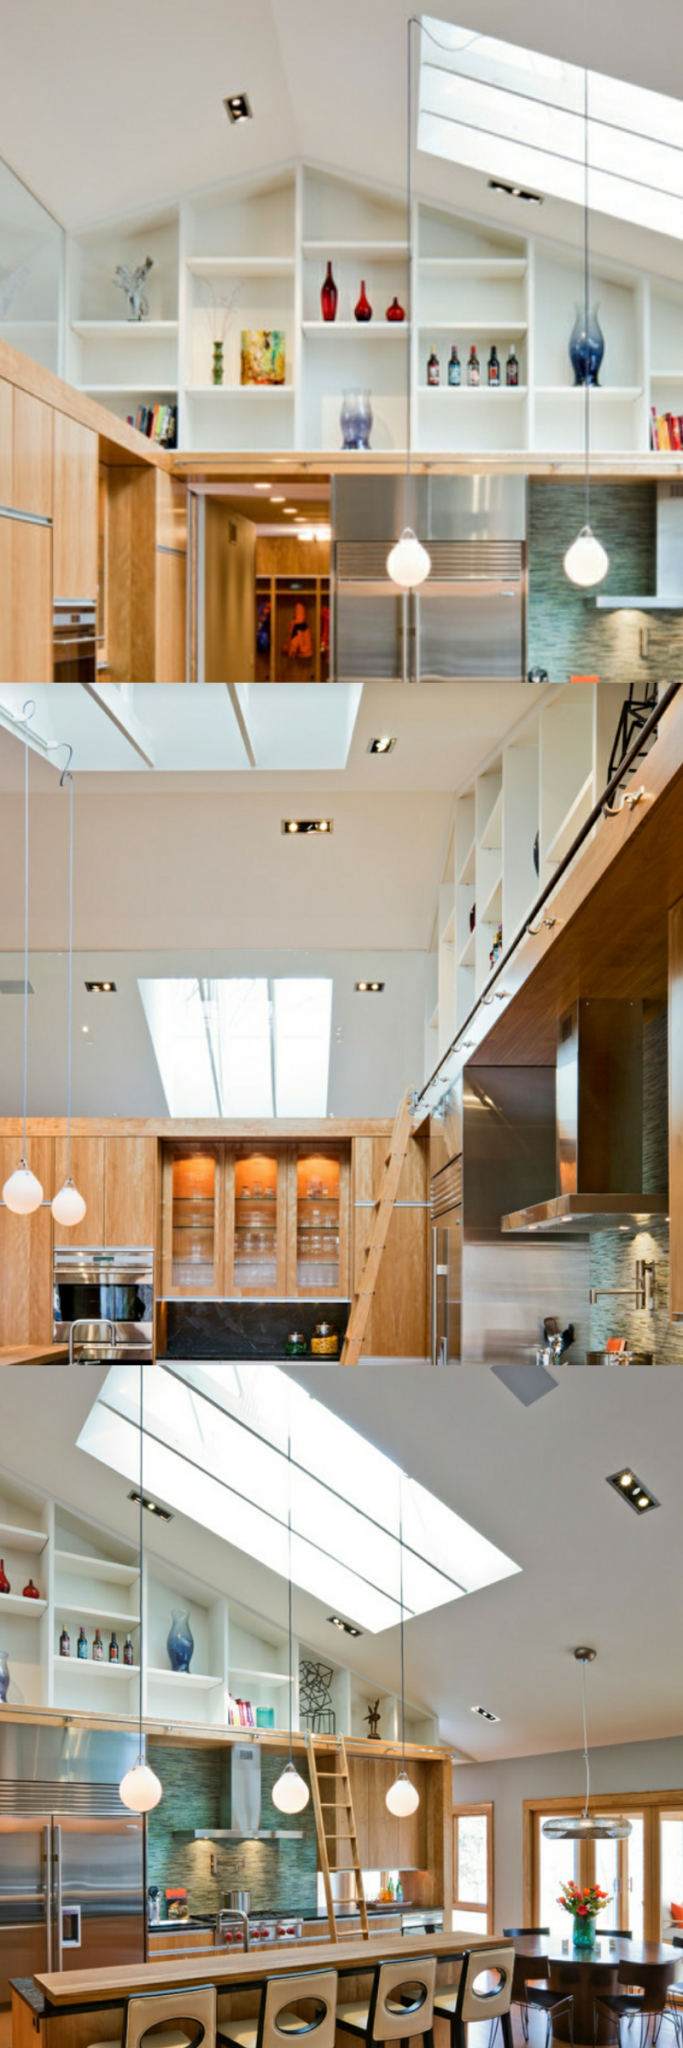 kitchen ceiling panels